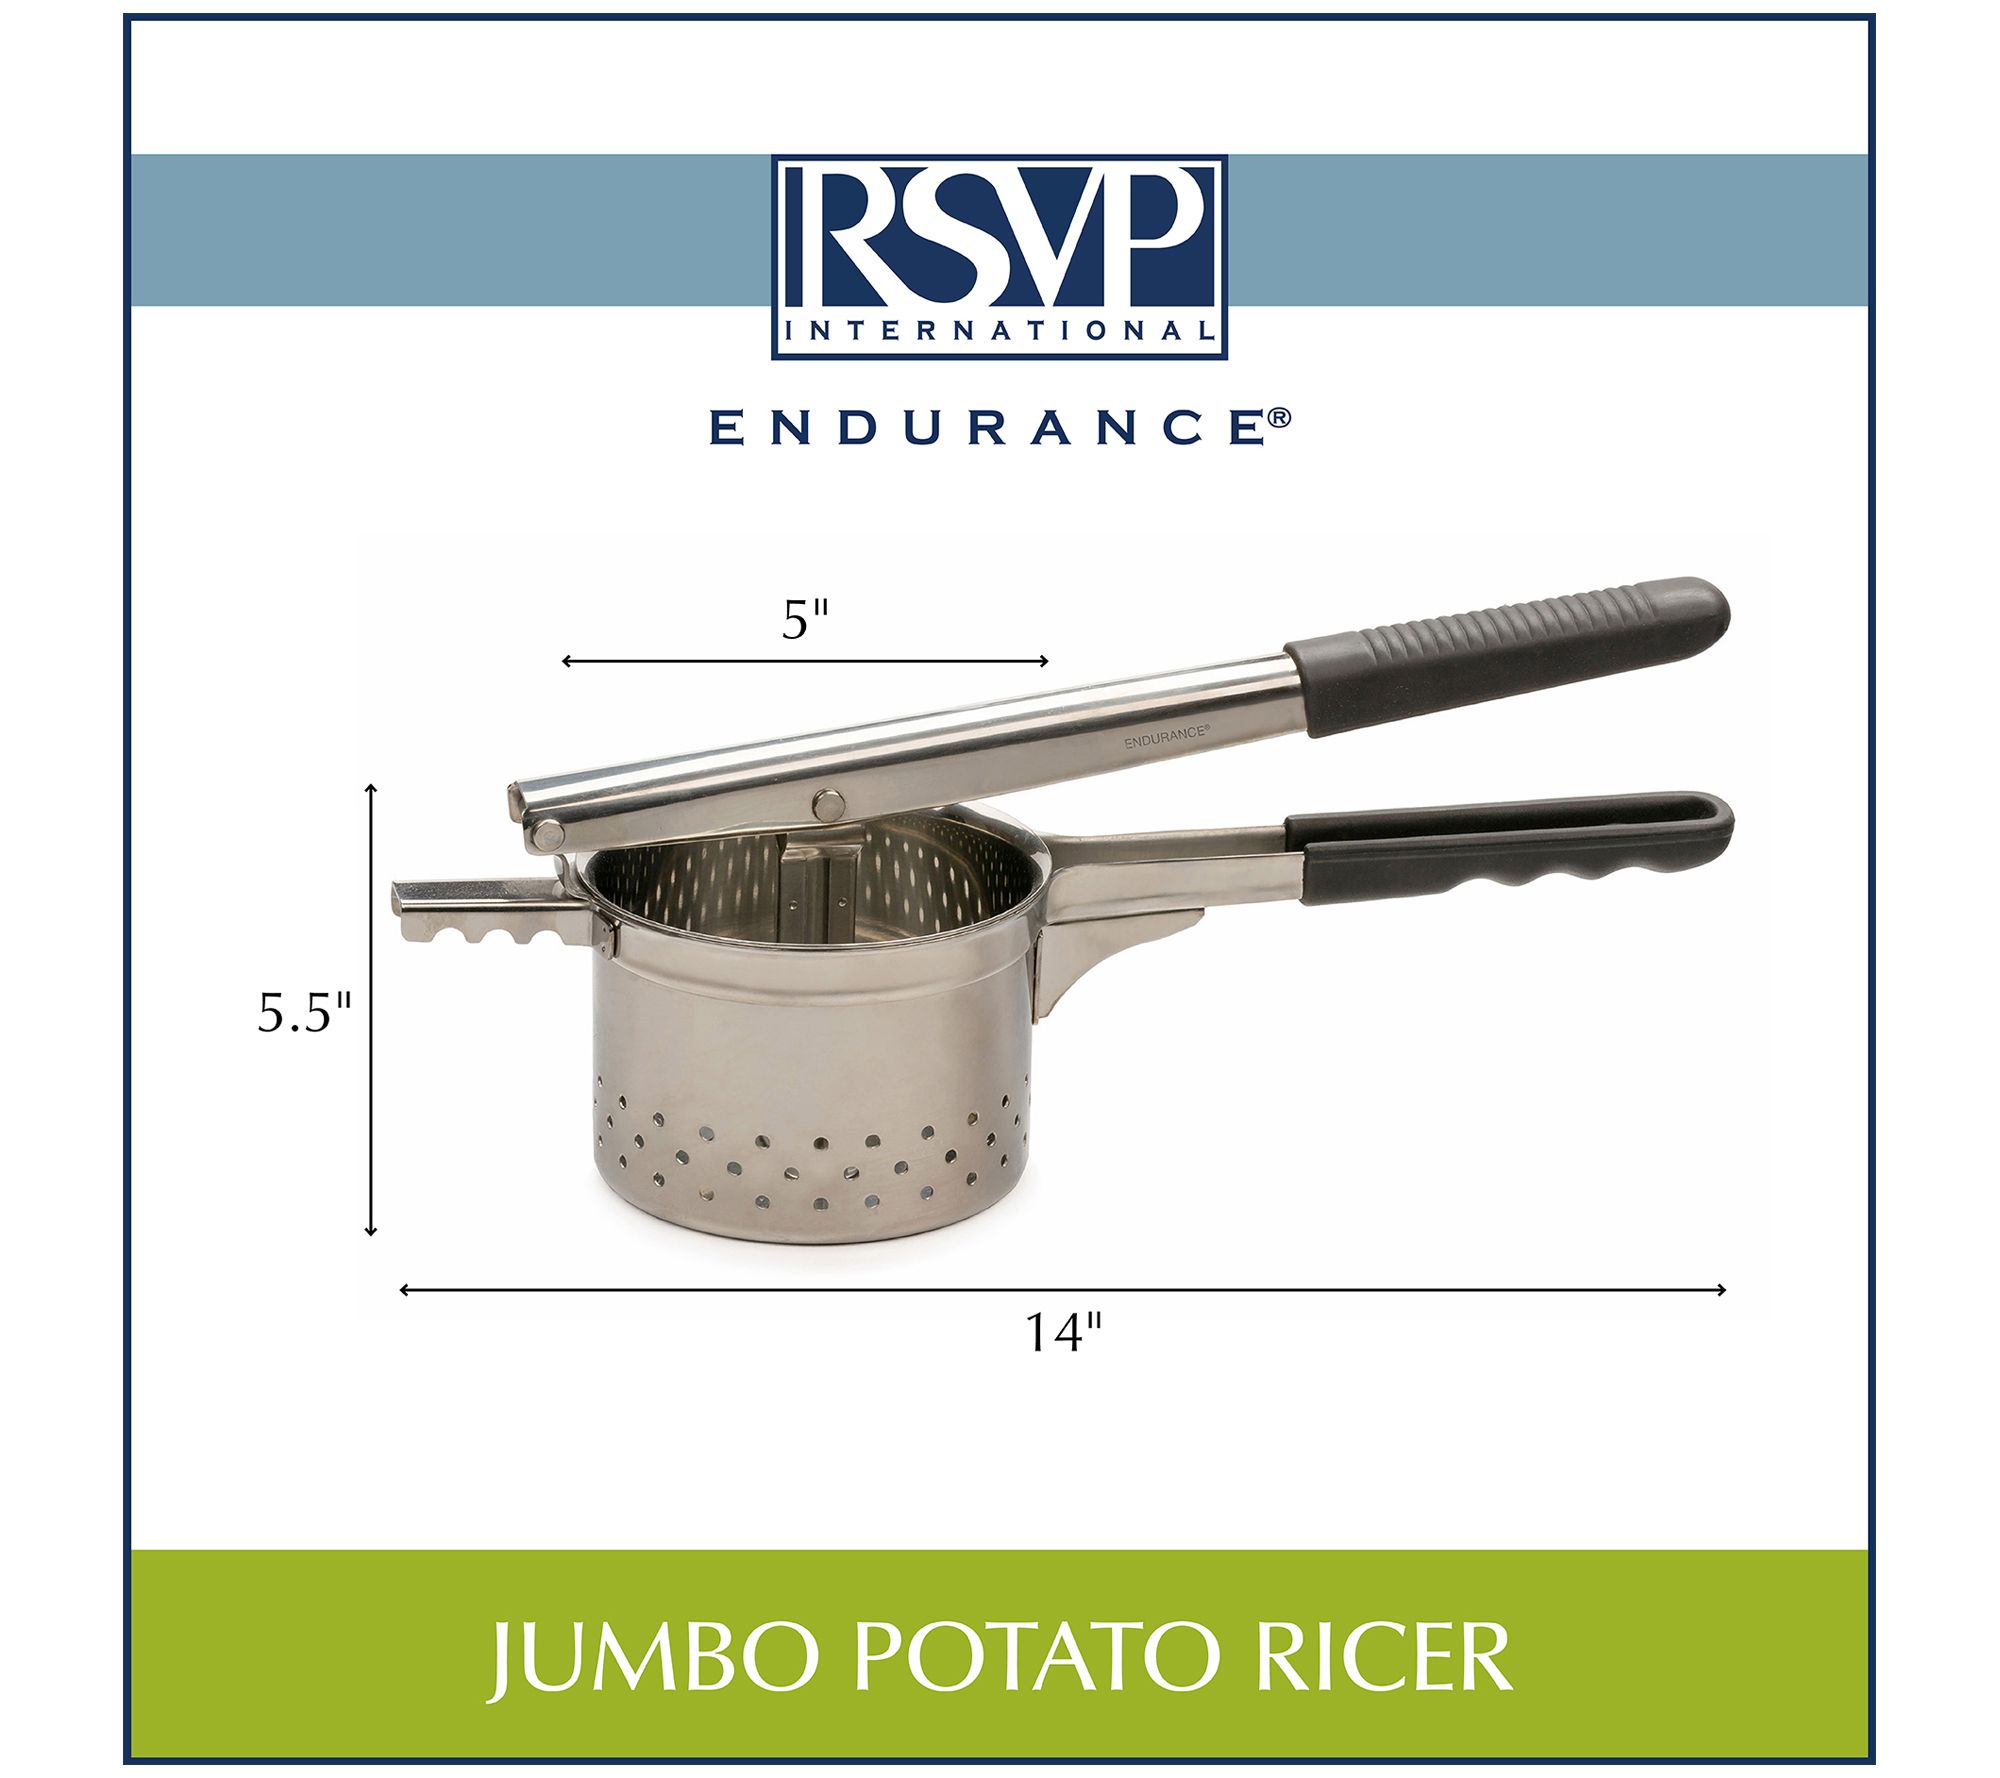 RSVP Potato Ricer